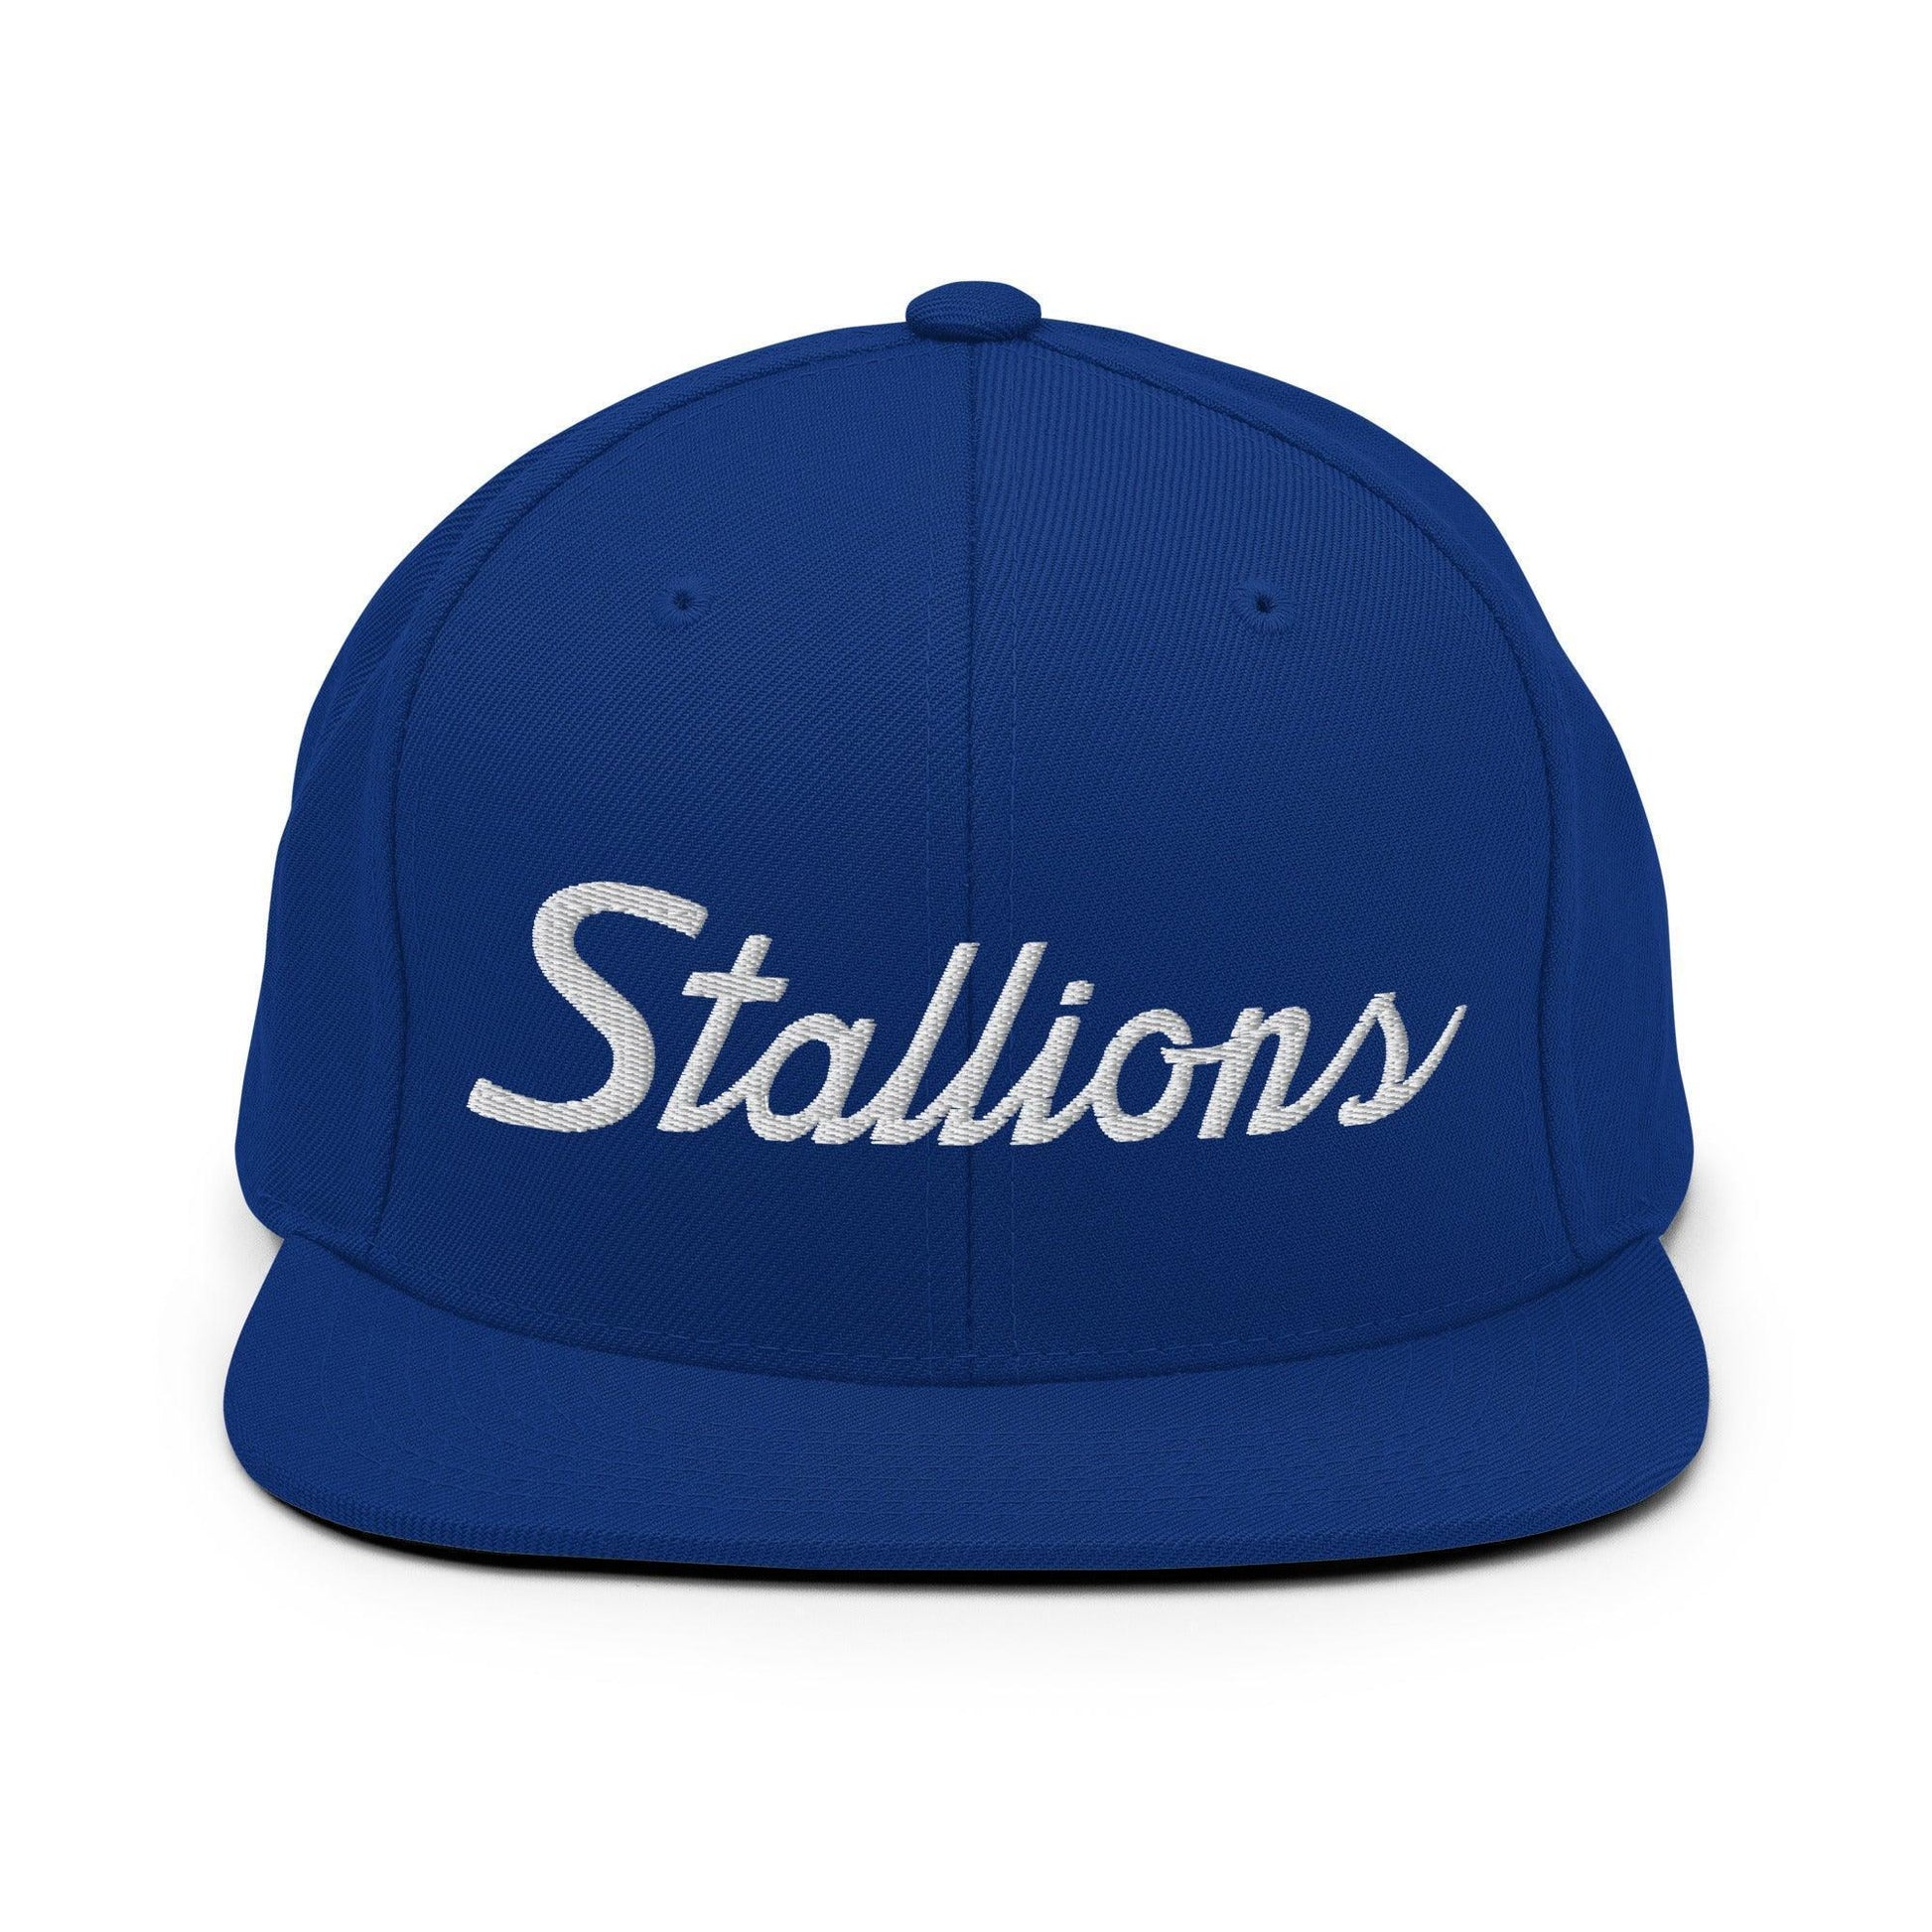 Stallions School Mascot Script Snapback Hat Royal Blue